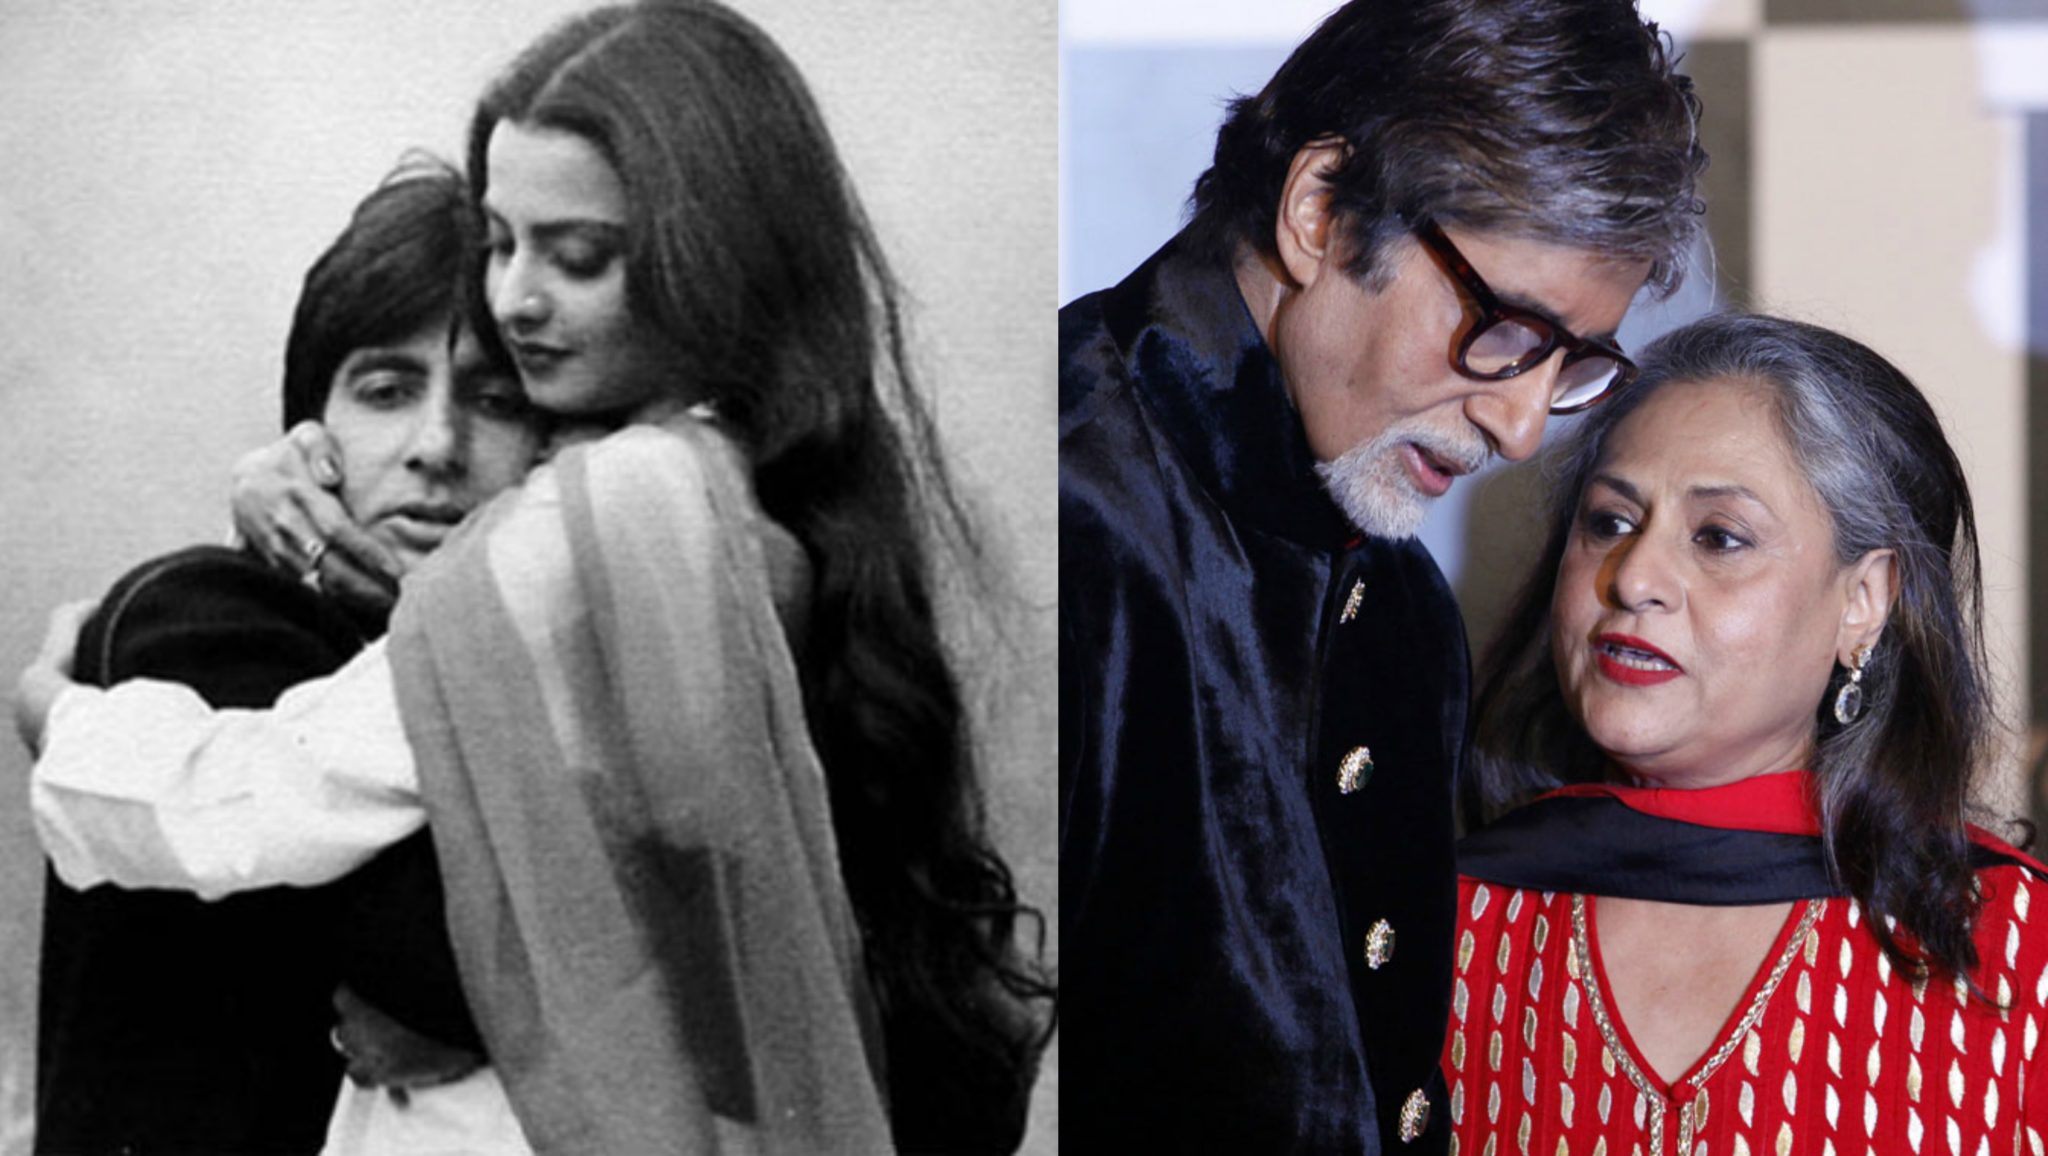 Bollywood Veteran Actress,jaya bachchan,Birthday Special,Unknown Facts,Rekha,Amitabh Bachchan